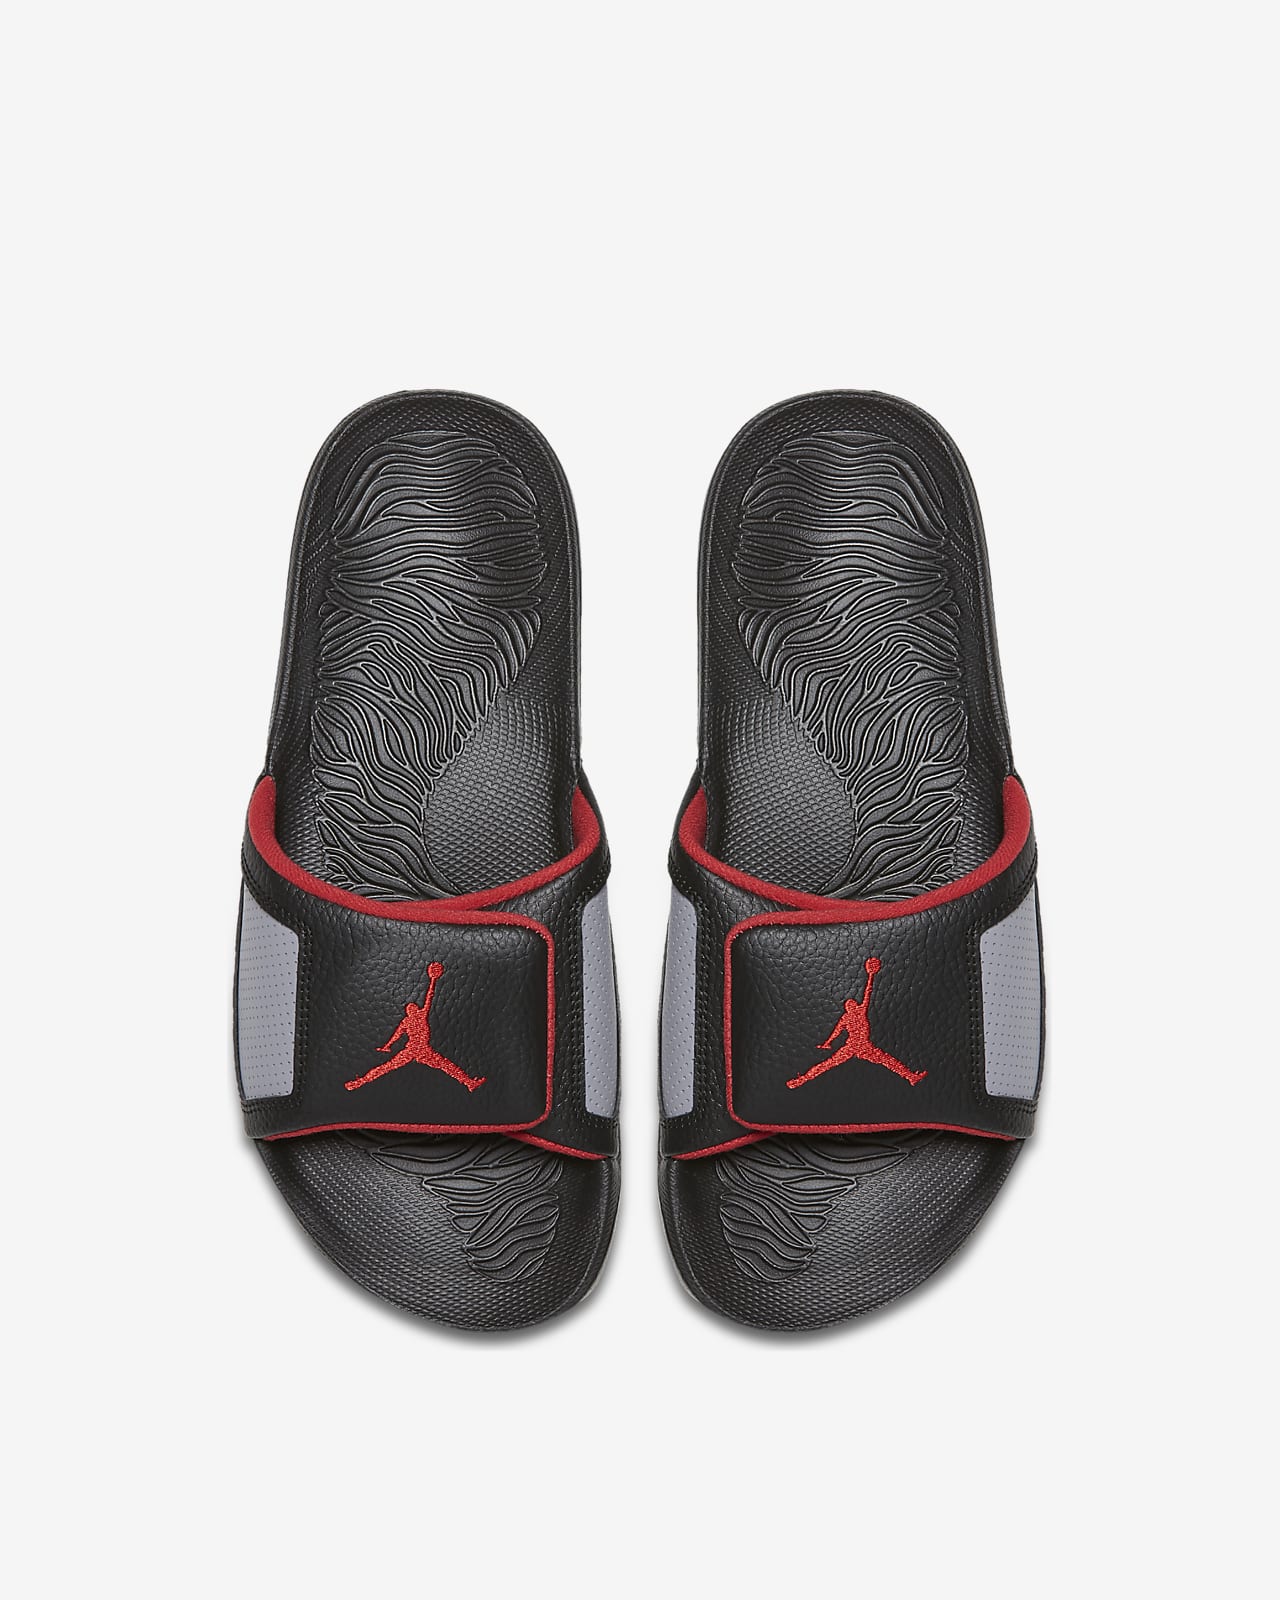 Jordan Hydro III Retro Men's Slide. Nike SG